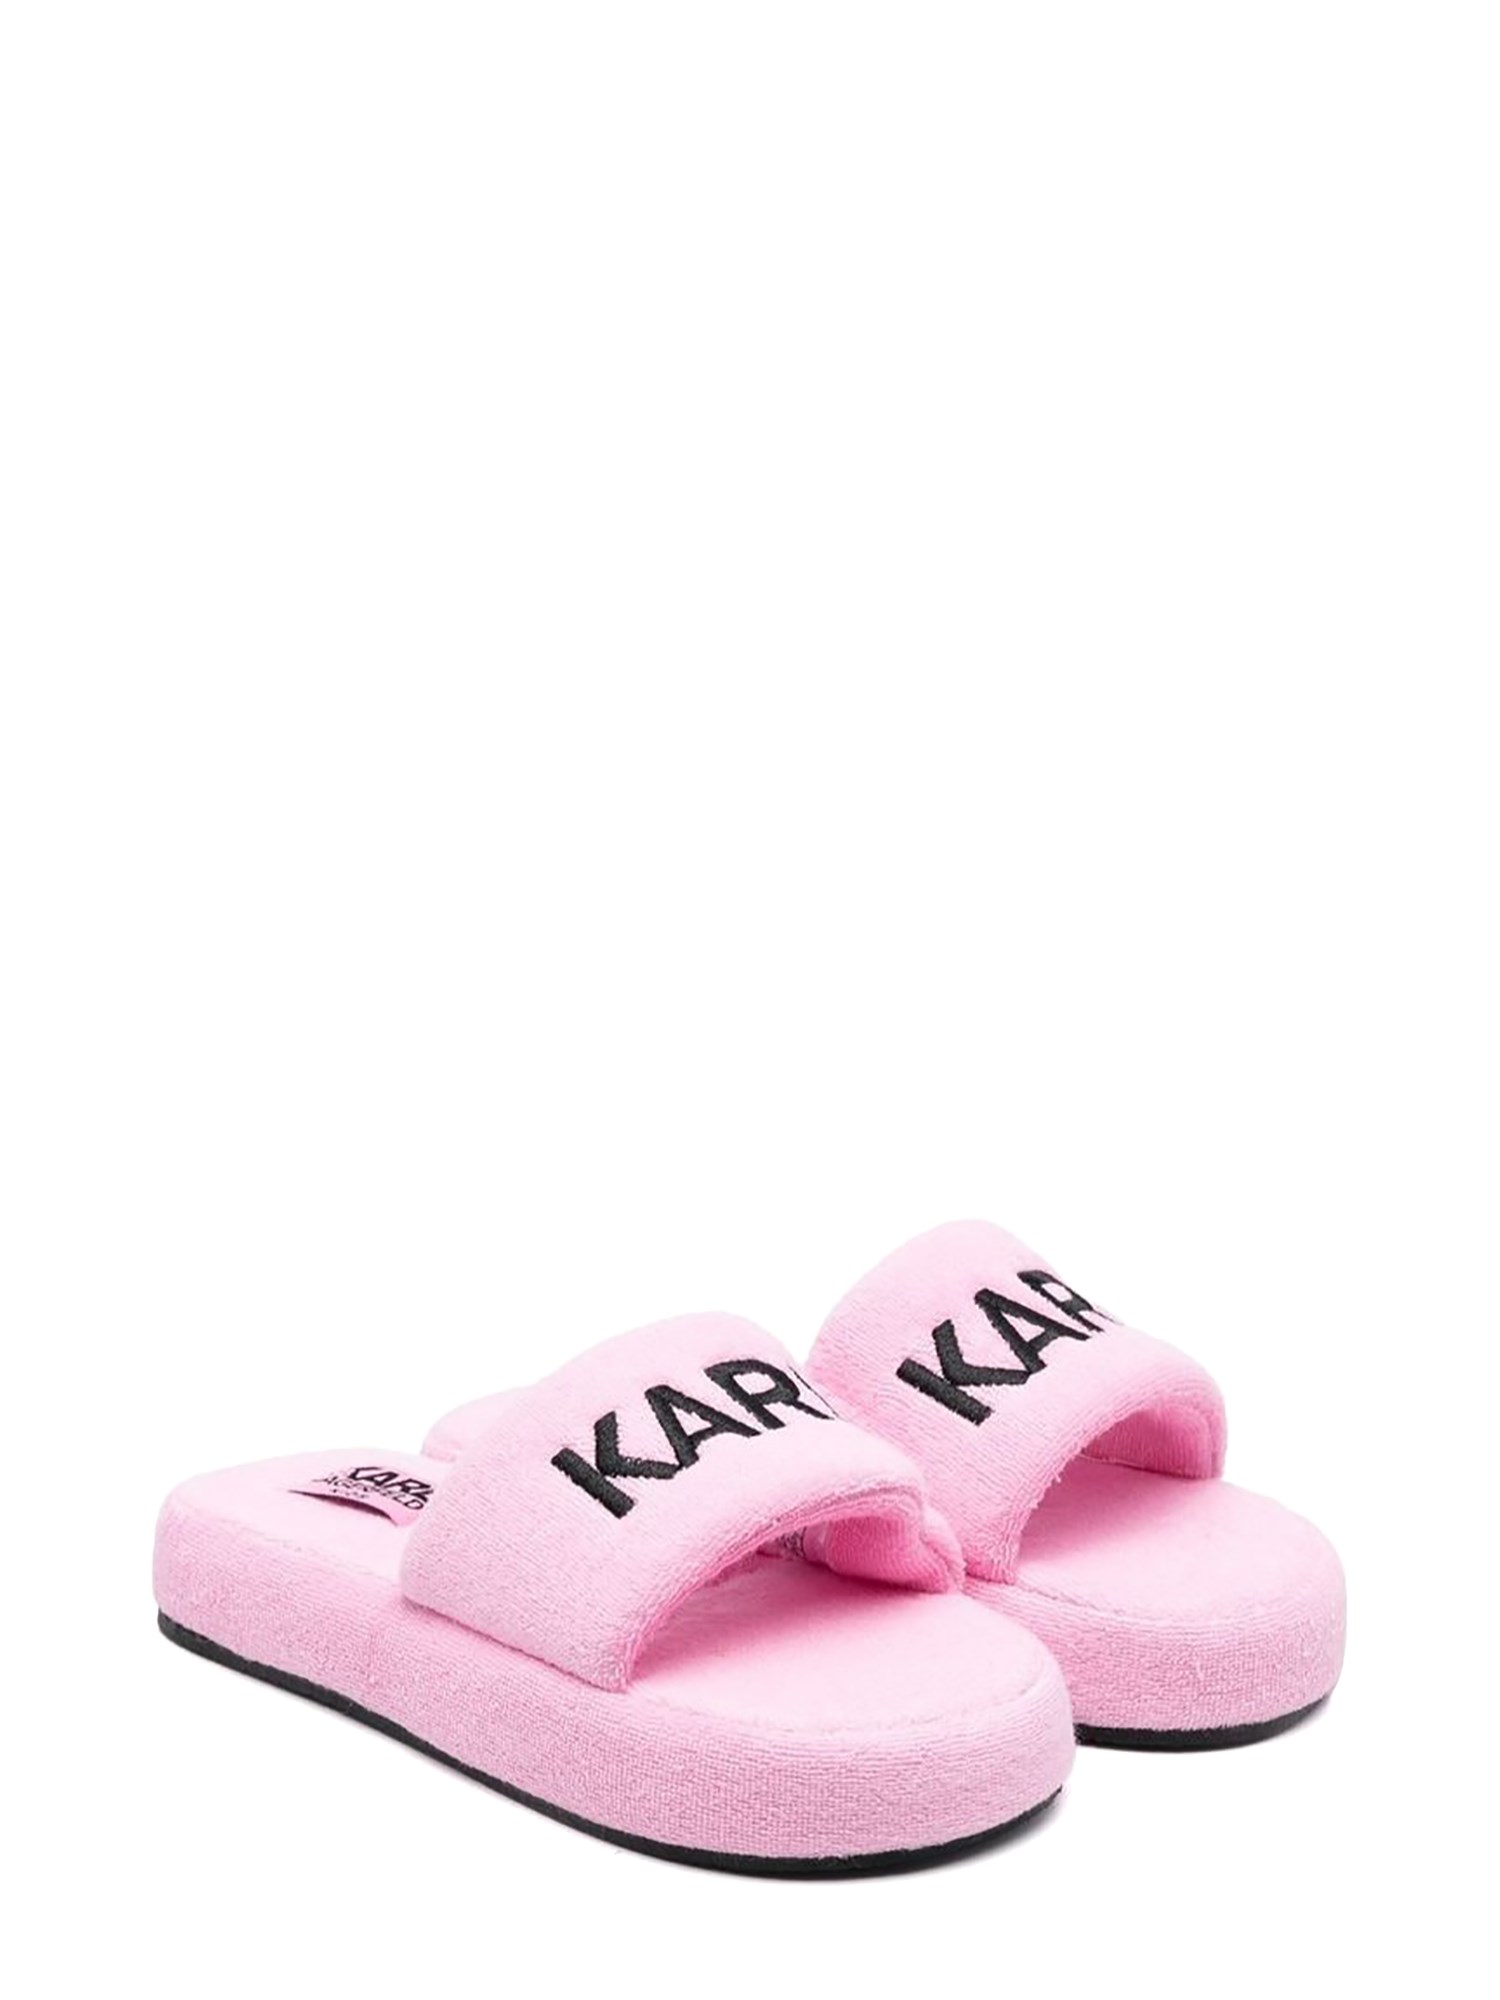 Lagerfeld Logo Slippers In Pink | ModeSens